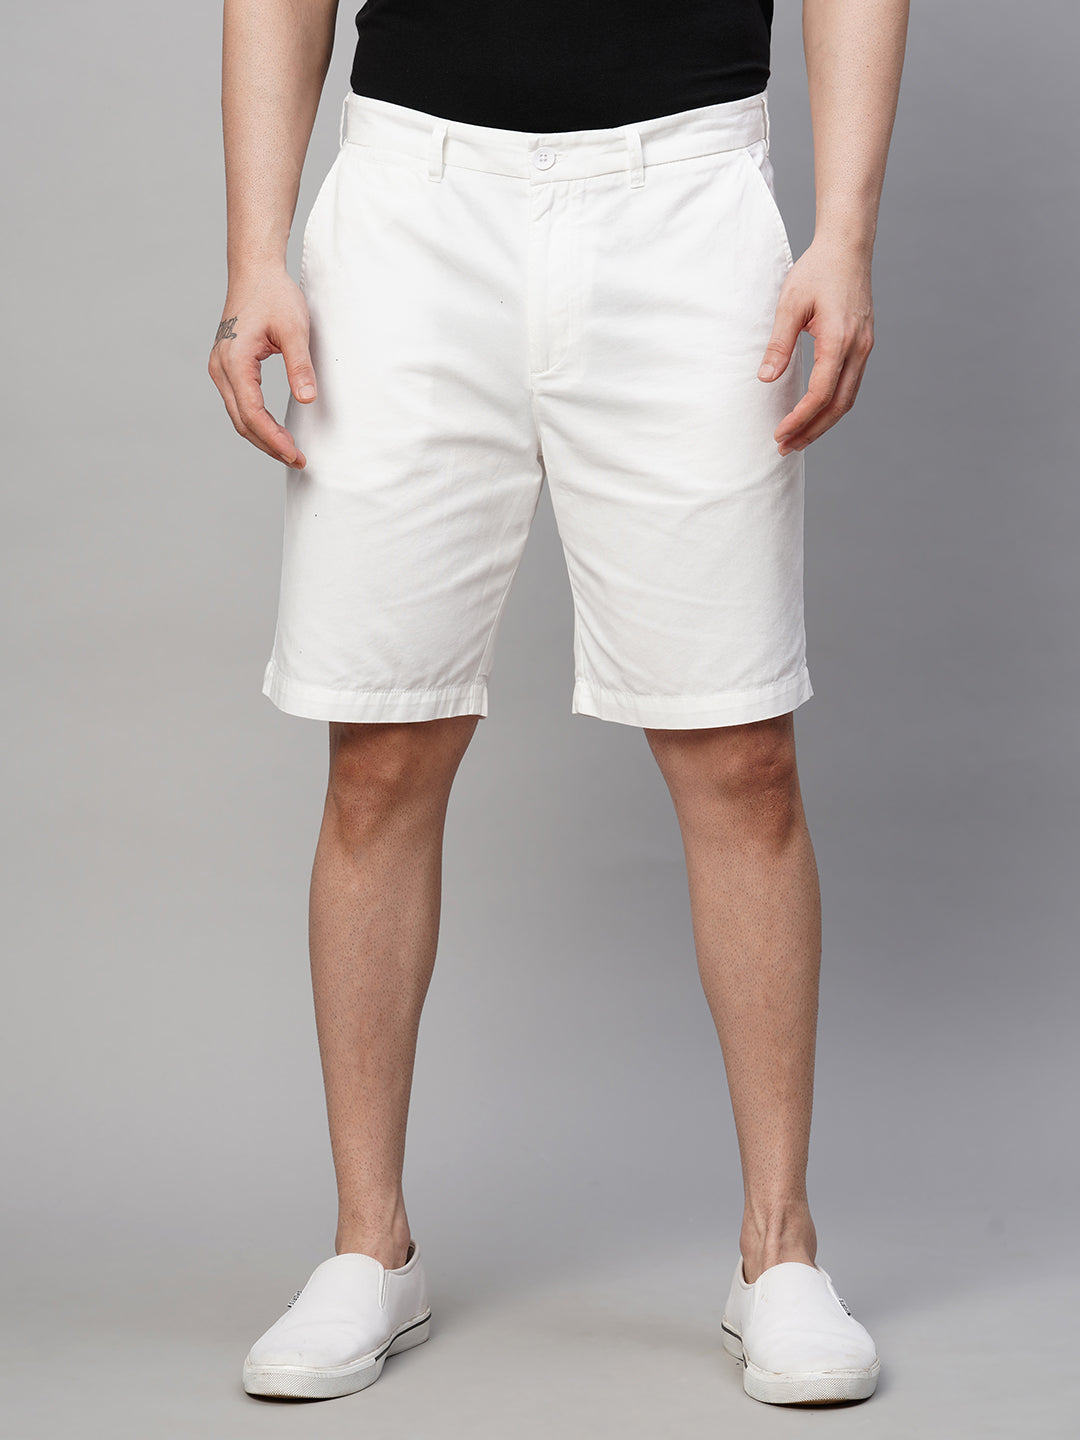 Jean Shorts Women Summer White | White Denim Shorts Fringe | White Jeans  Shorts Korean - Jeans - Aliexpress